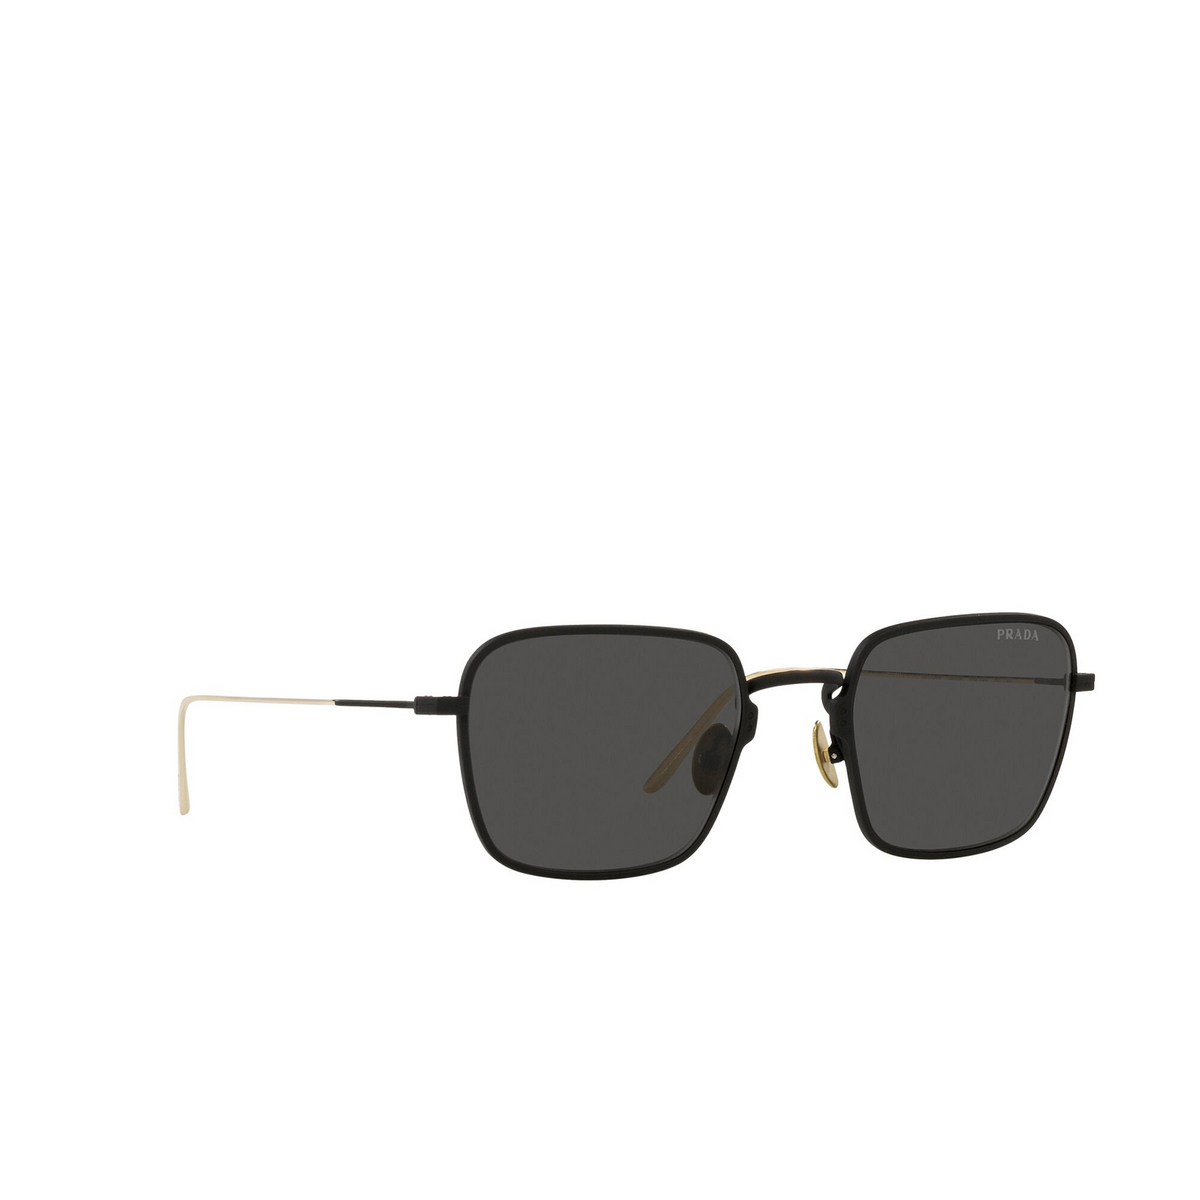 Prada® Square Sunglasses: PR 54WS color Matte Black 04Q5S0 - three-quarters view.